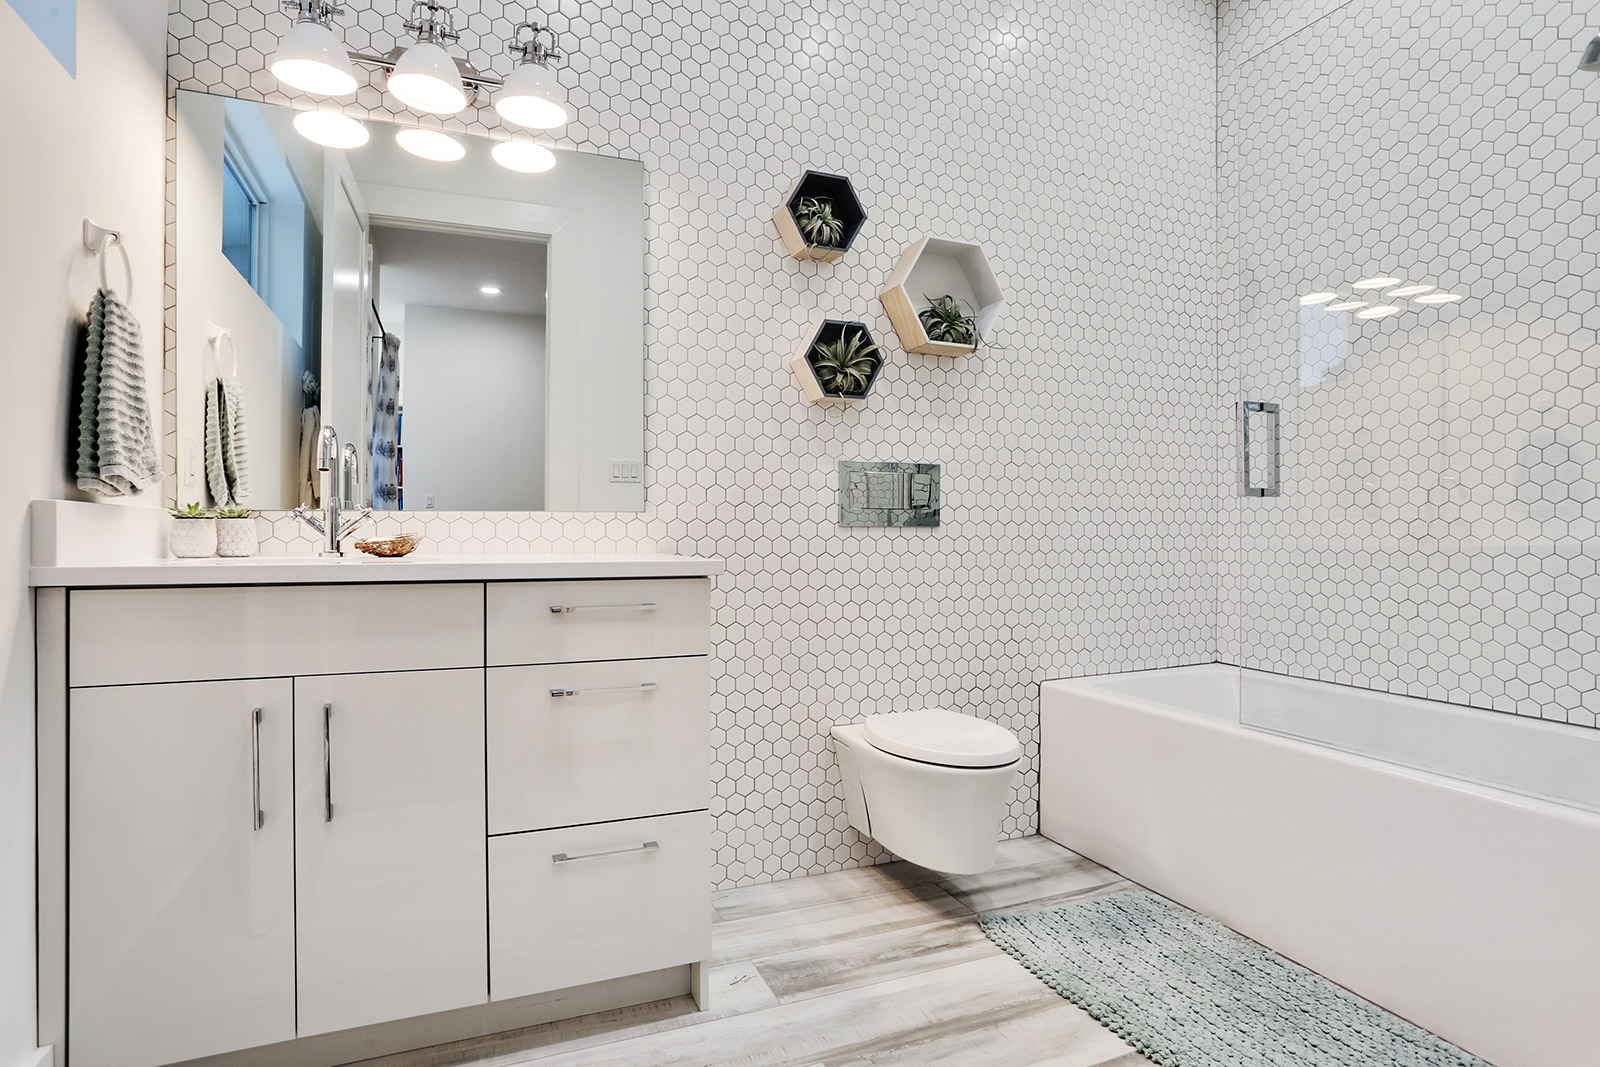 Bathroom of Elmeer House luxury new construction custom home designed and built by DMG Design+Build